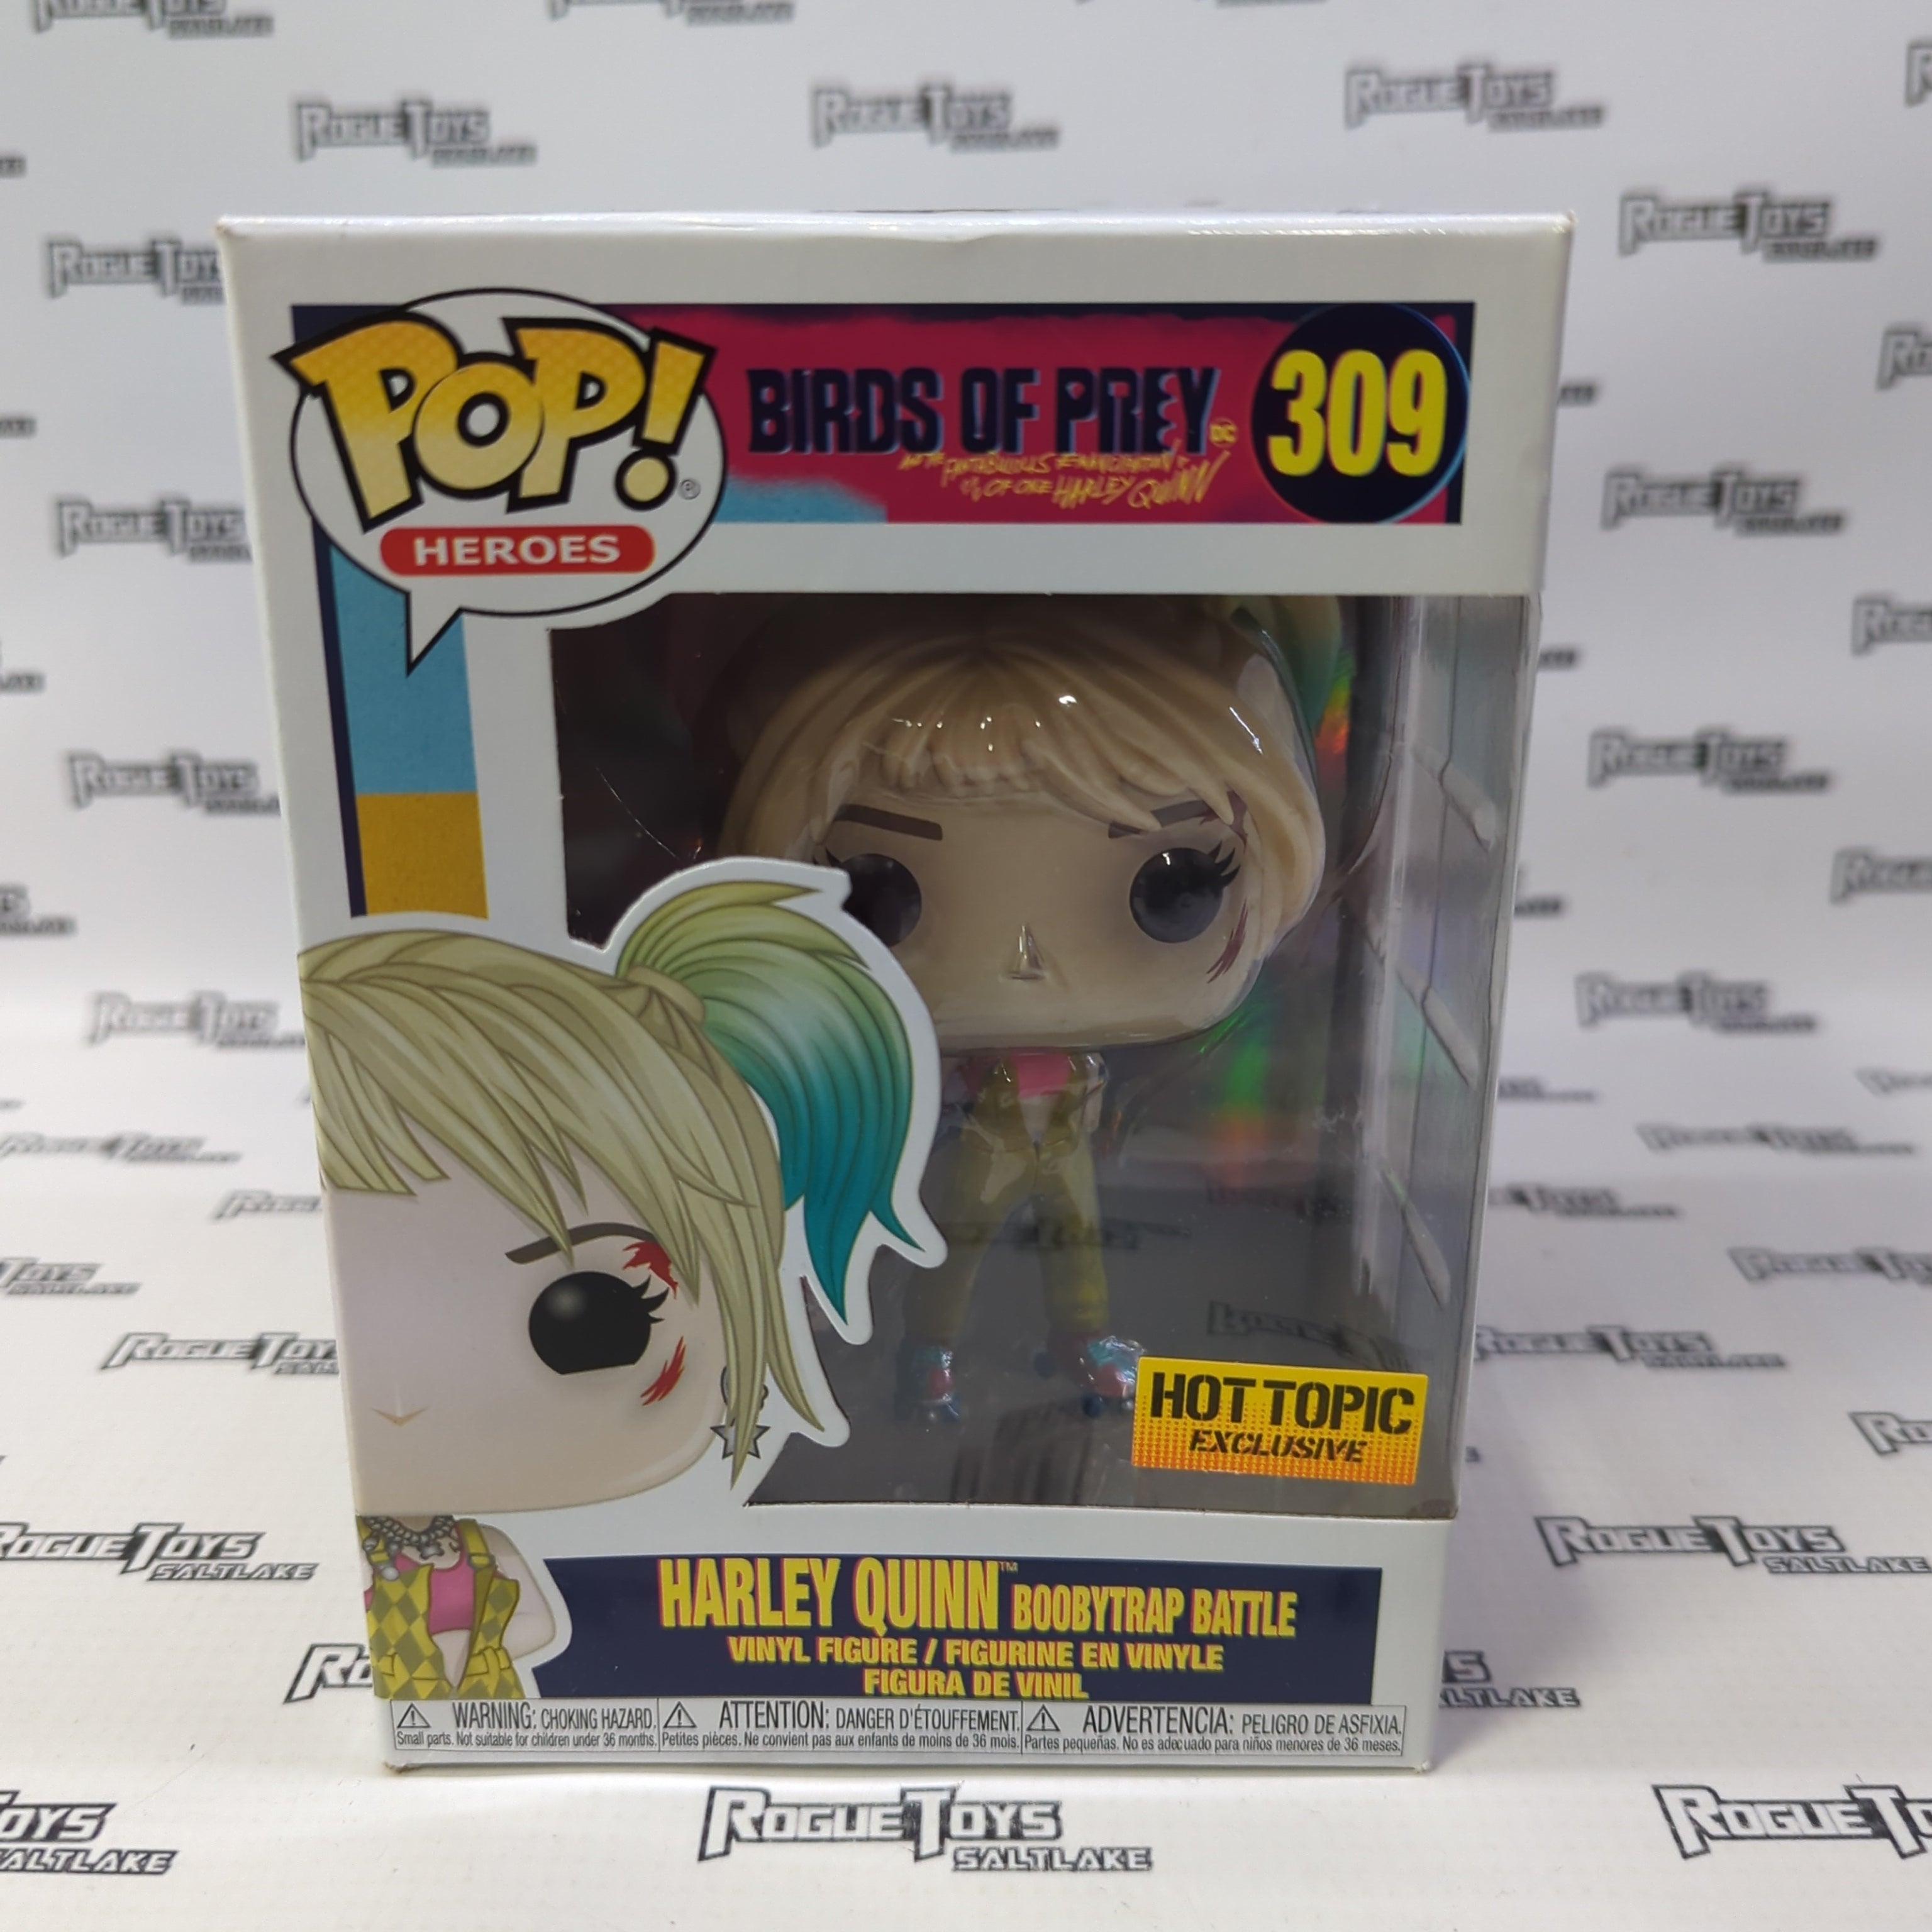 Funko POP! Heroes Birds of Prey Boobytrap Battle Harley Quinn (Hot Topic Exclusive) 309